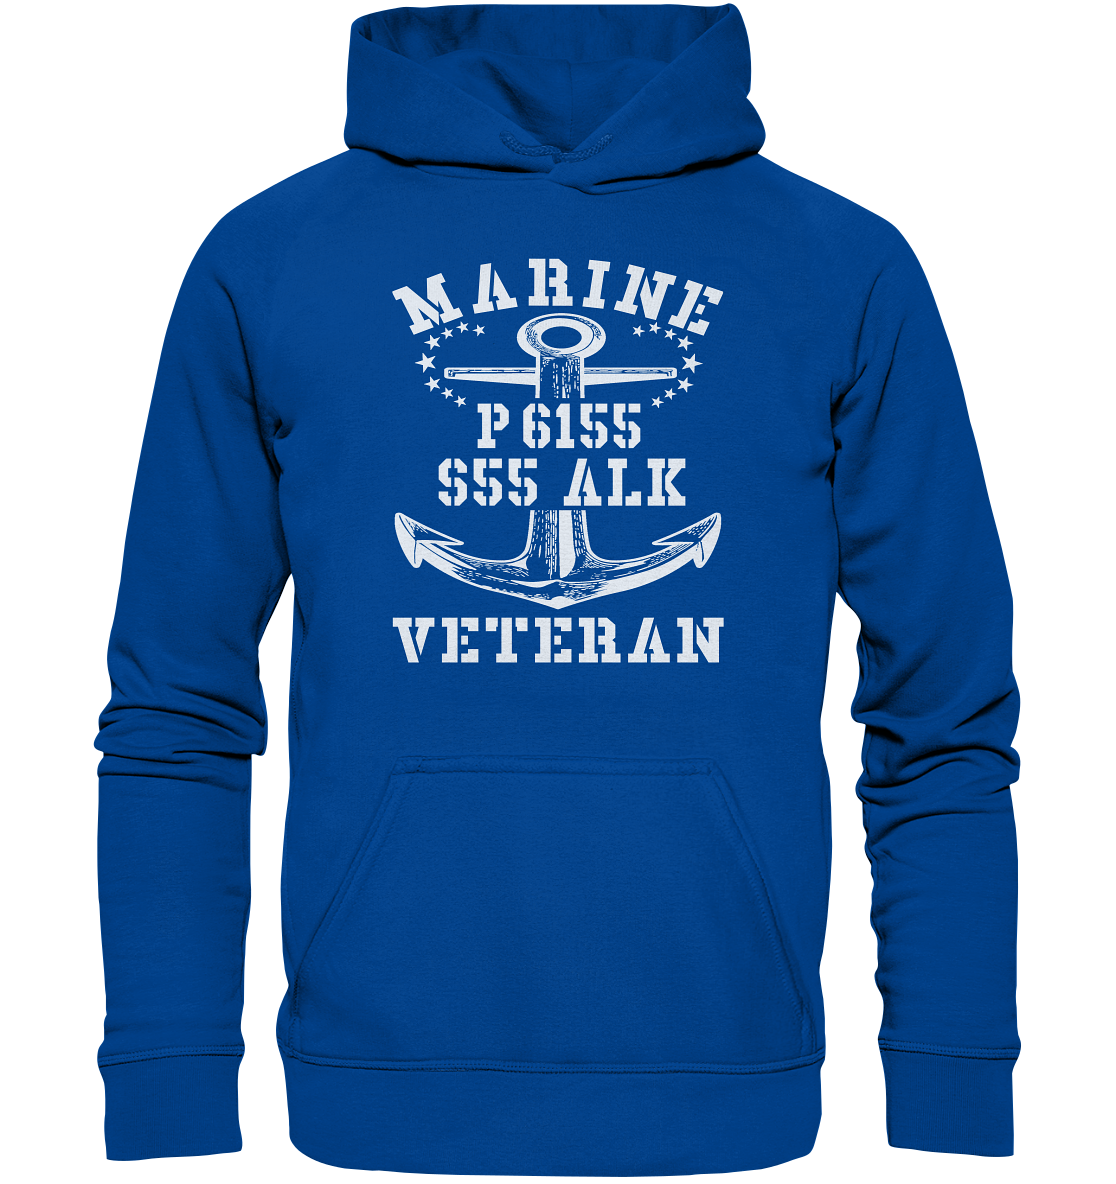 P6155 S55 ALK Marine Veteran - Basic Unisex Hoodie